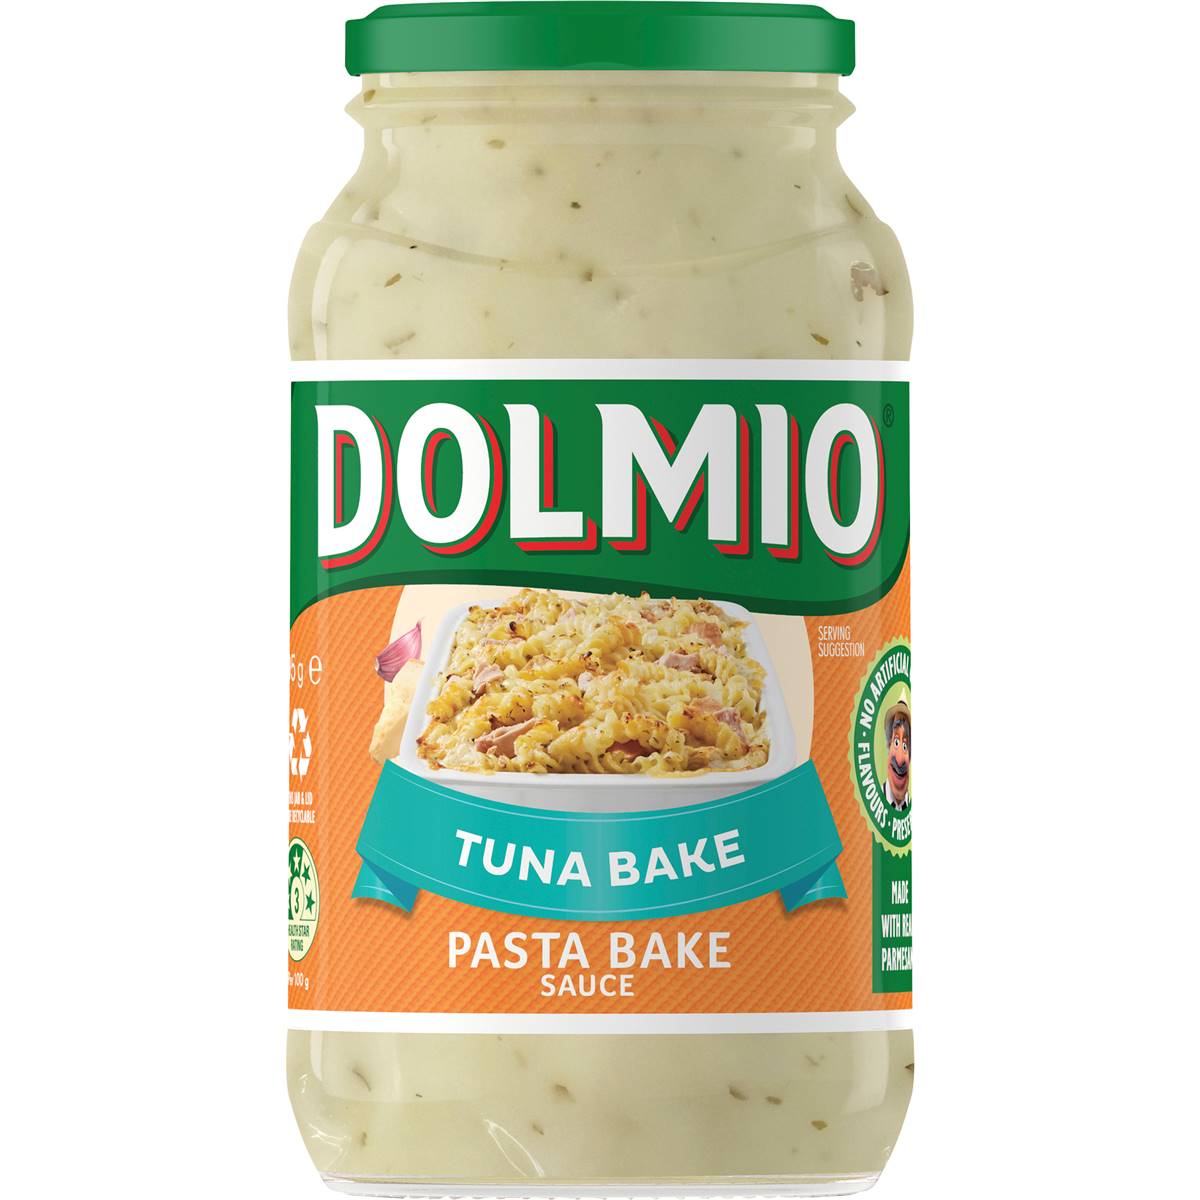 Calories in Dolmio Tuna Bake Pasta Bake Sauce